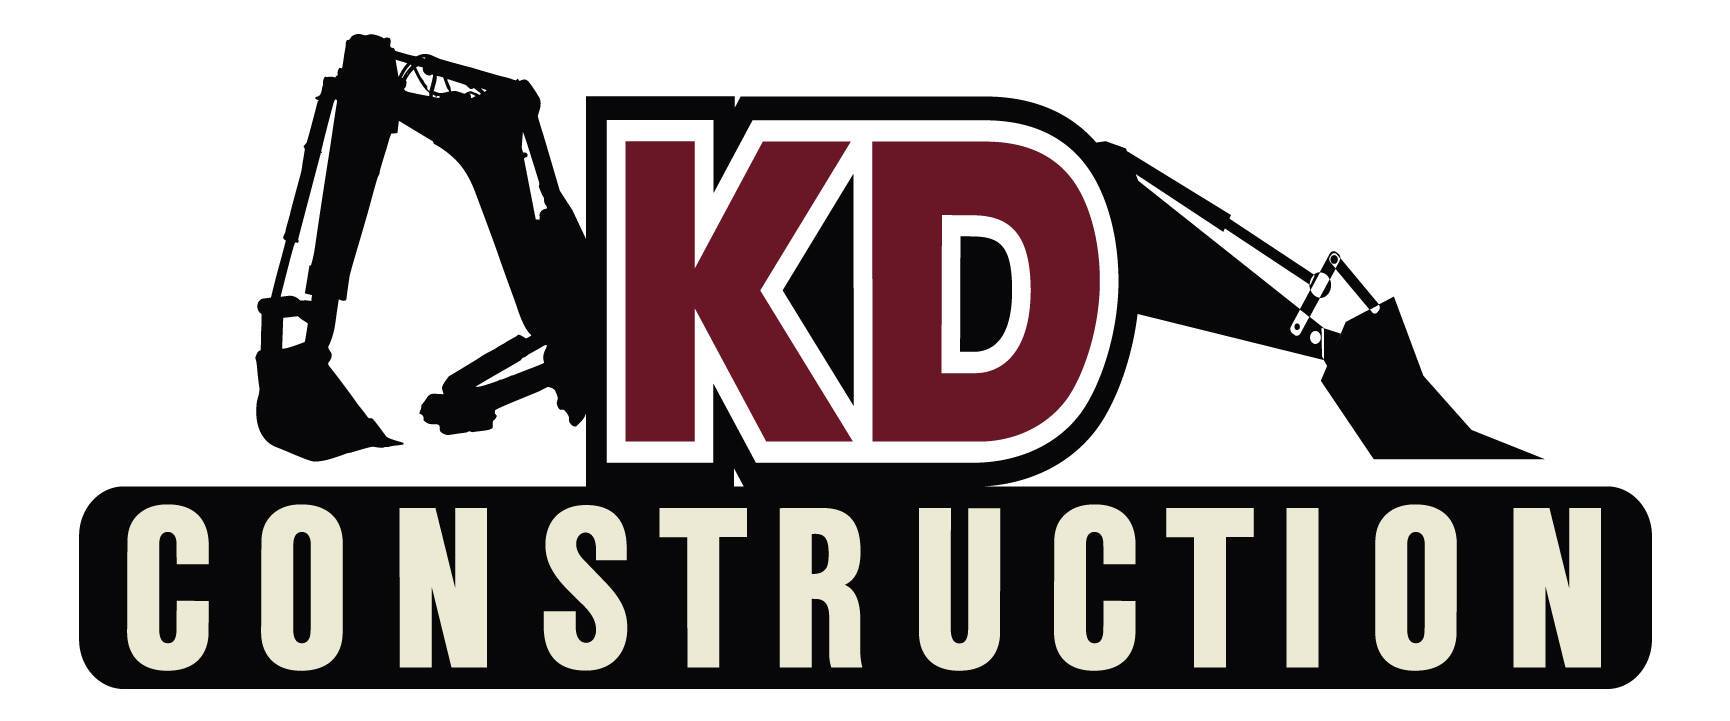 KD Construction